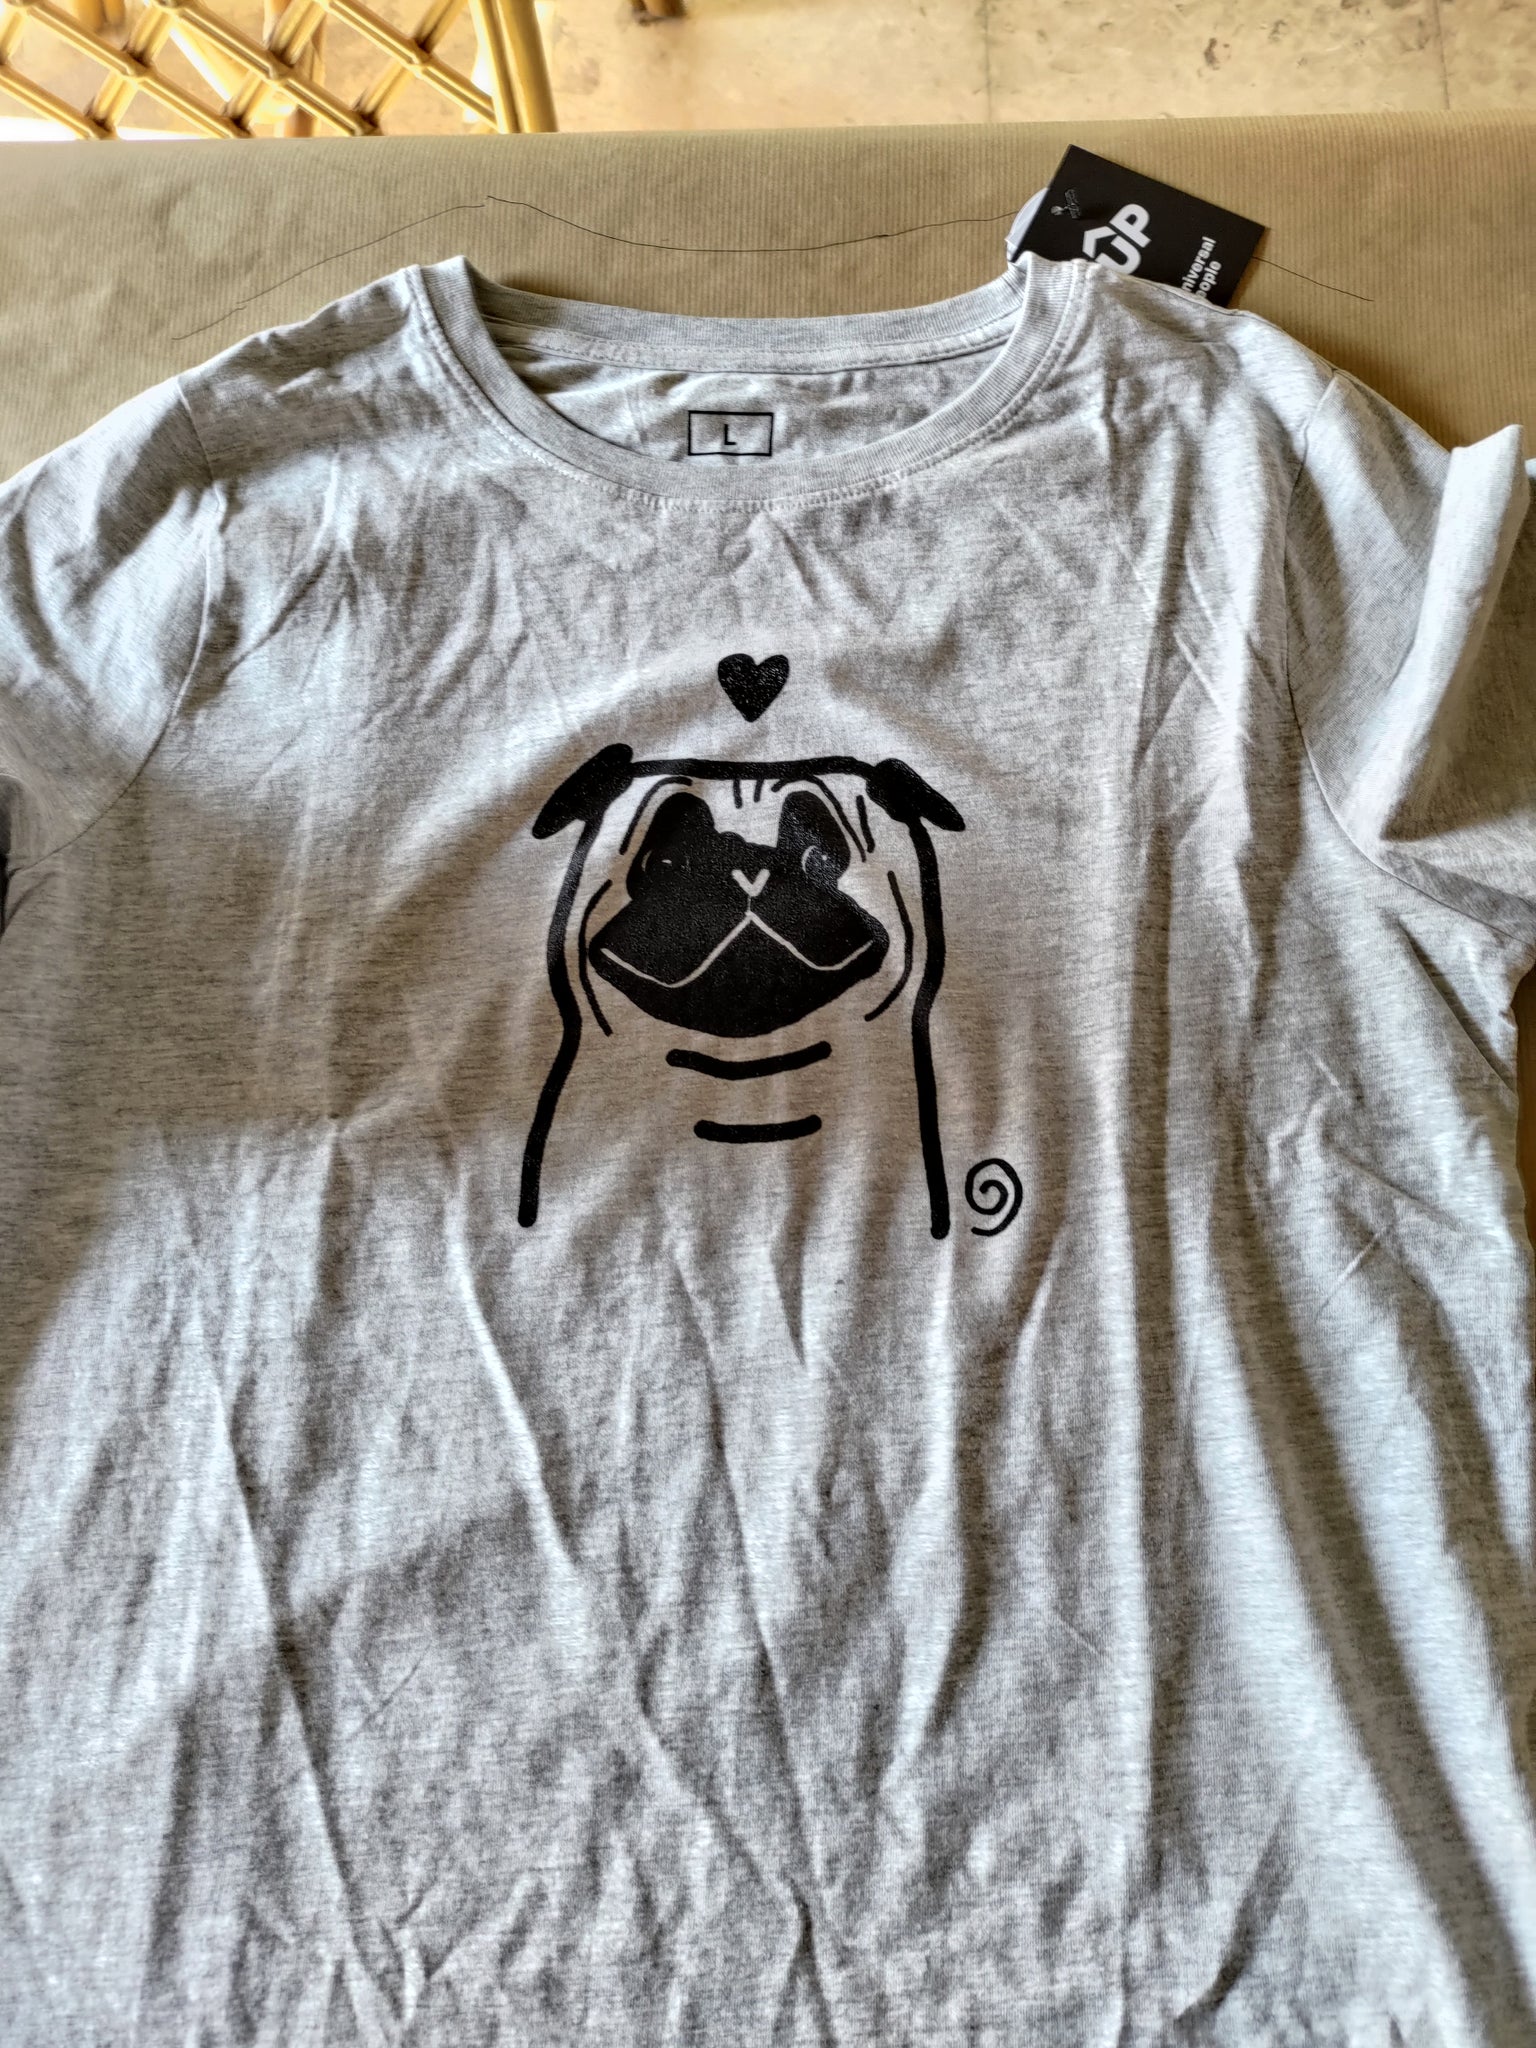 Cute Pug dog t-shirt handmade art Carla Ventresca